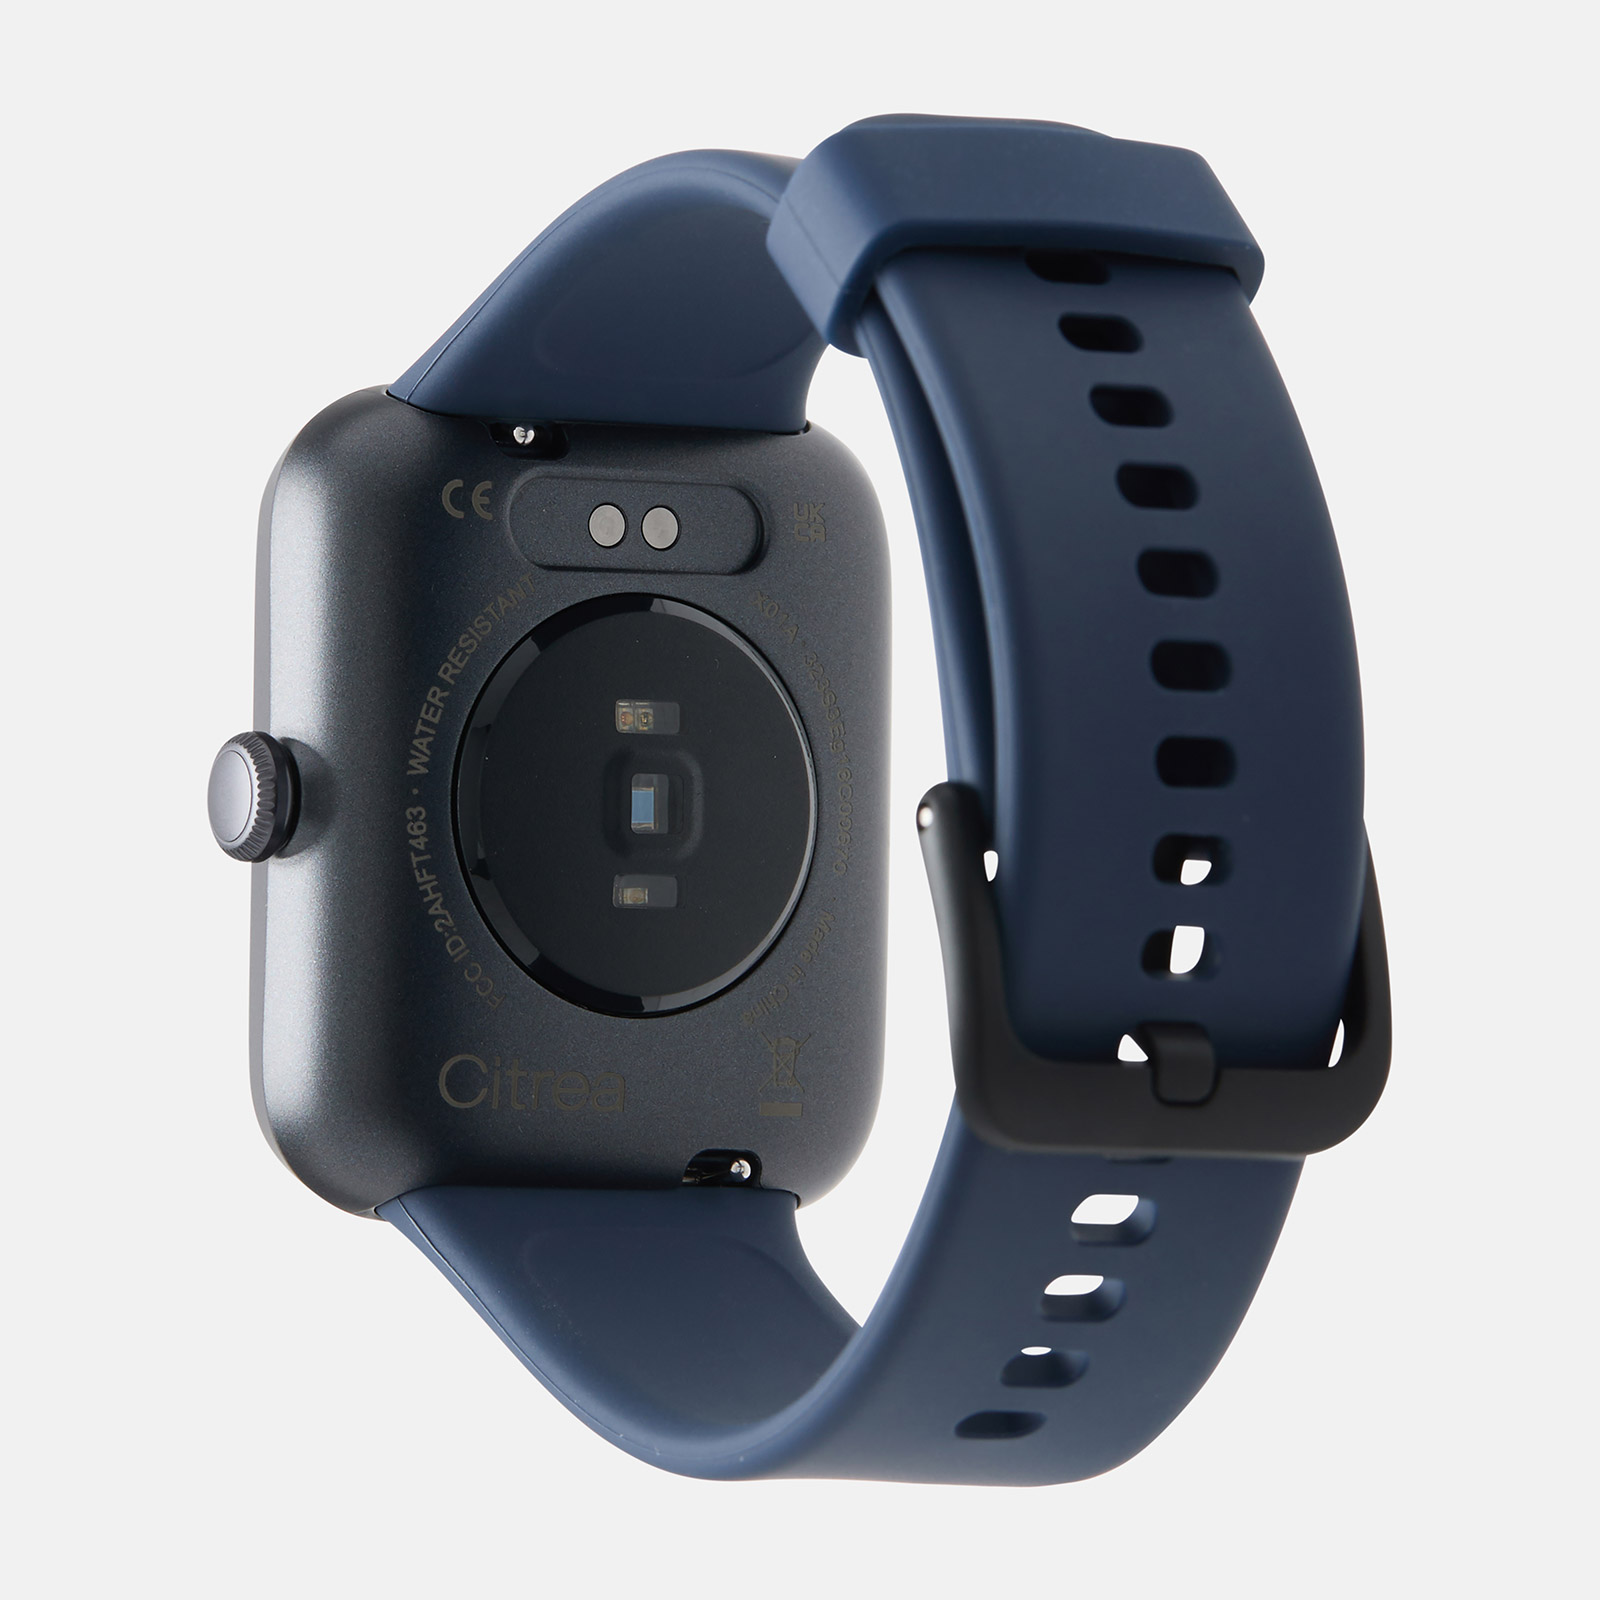 Citrea Smart Watch - gummi, blå, 1,5 tum